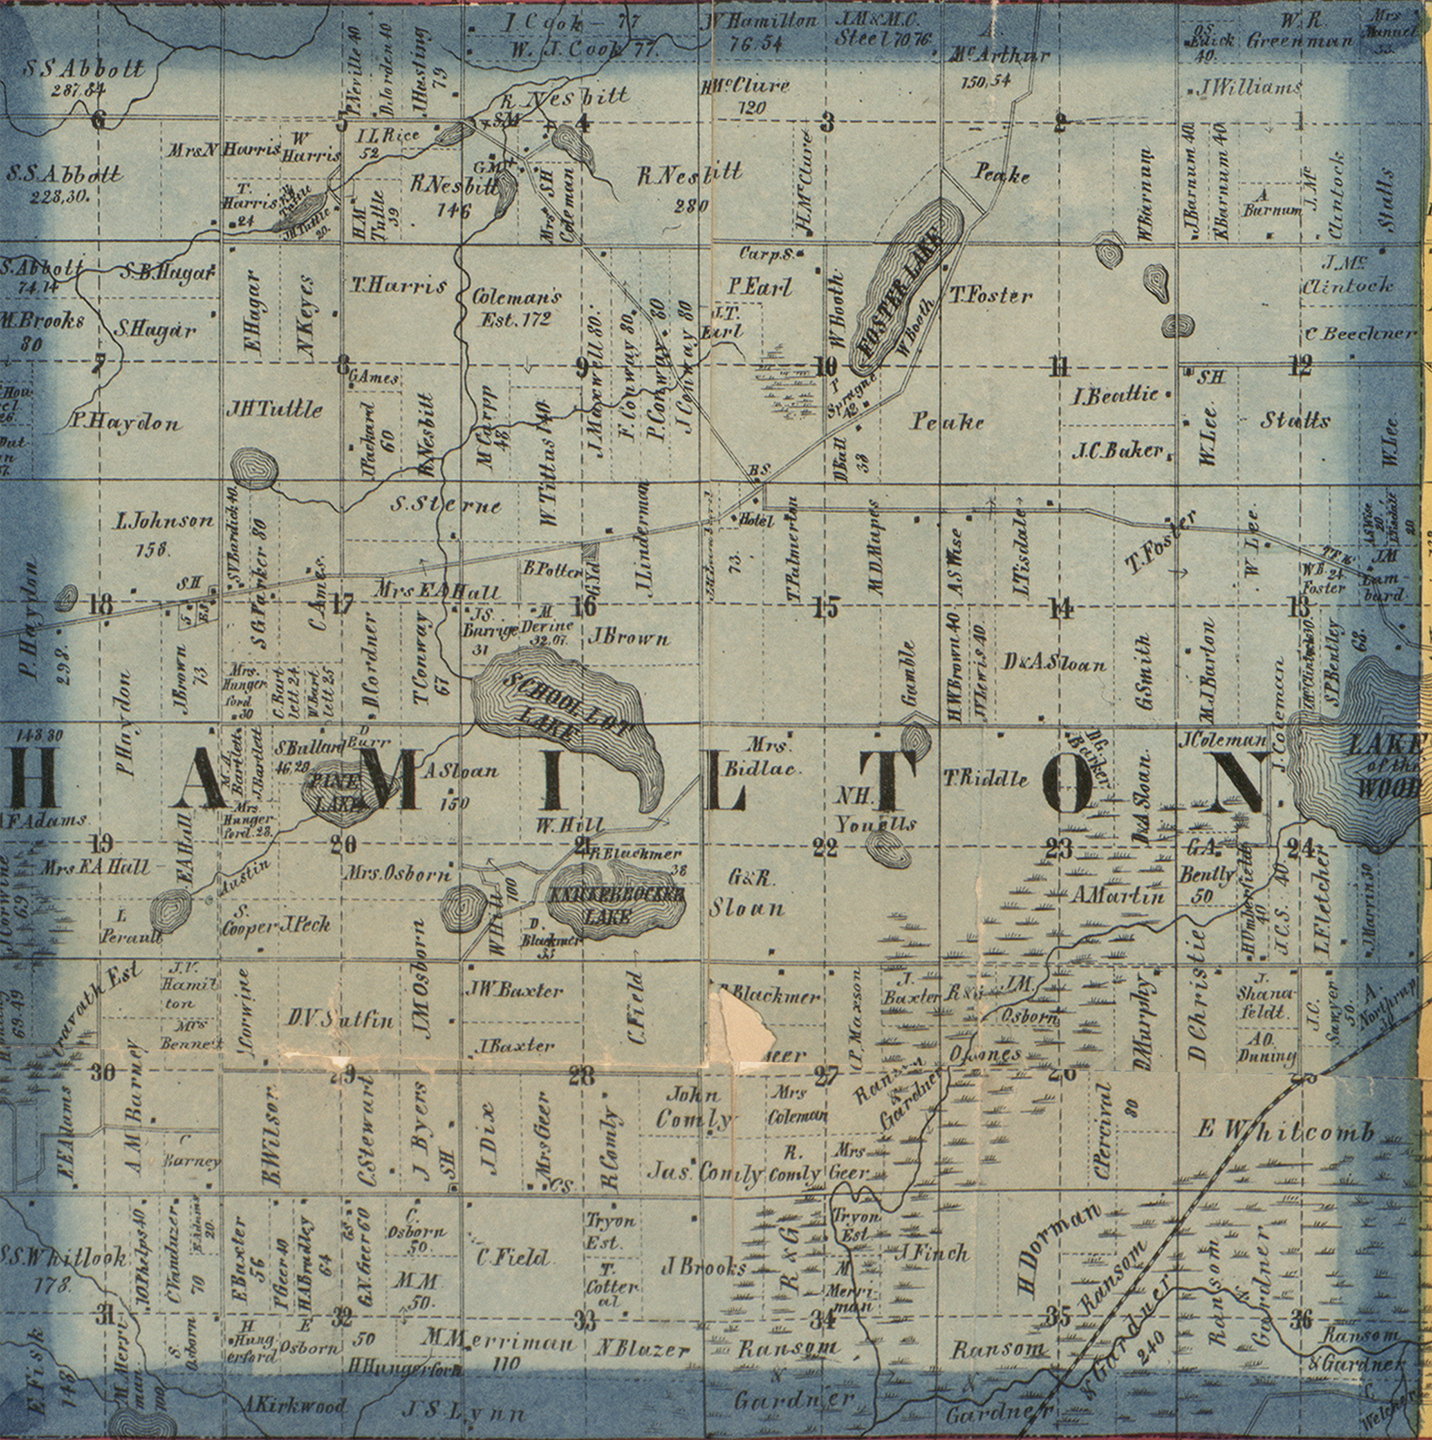 1860 Hamilton Township, Michigan landownership map